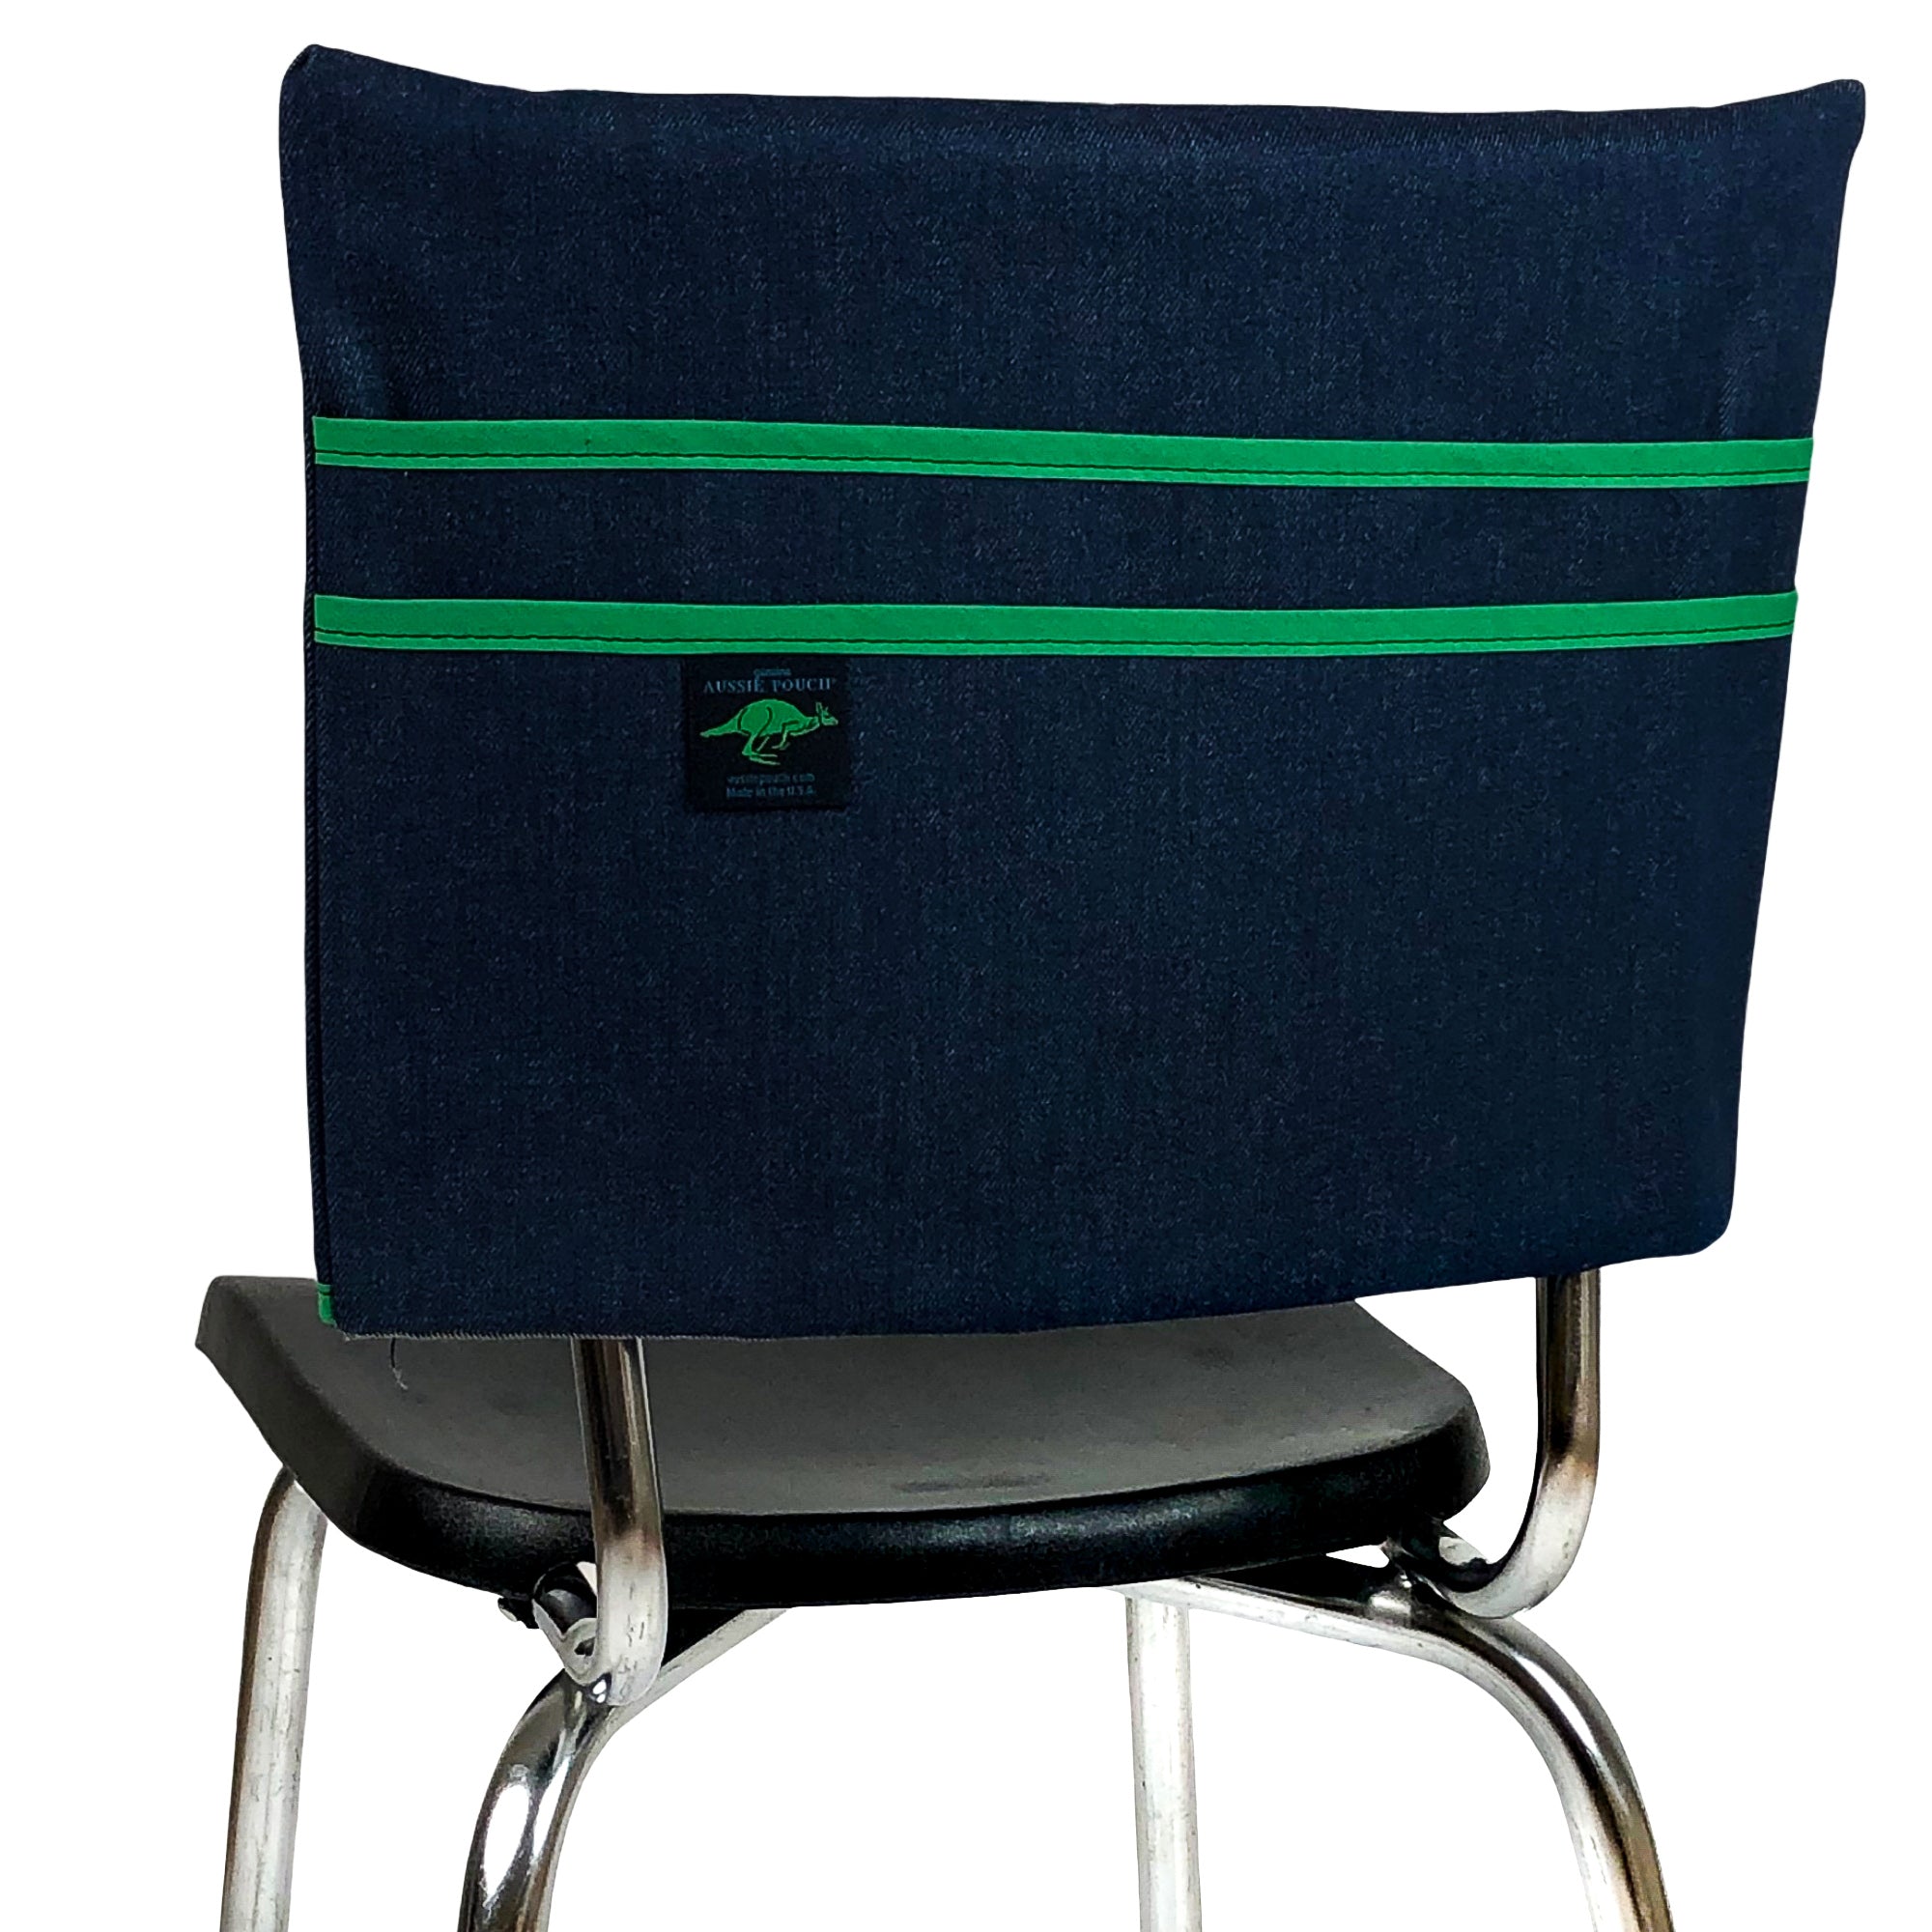 classic chair pocketaussie pouch® classroom organization